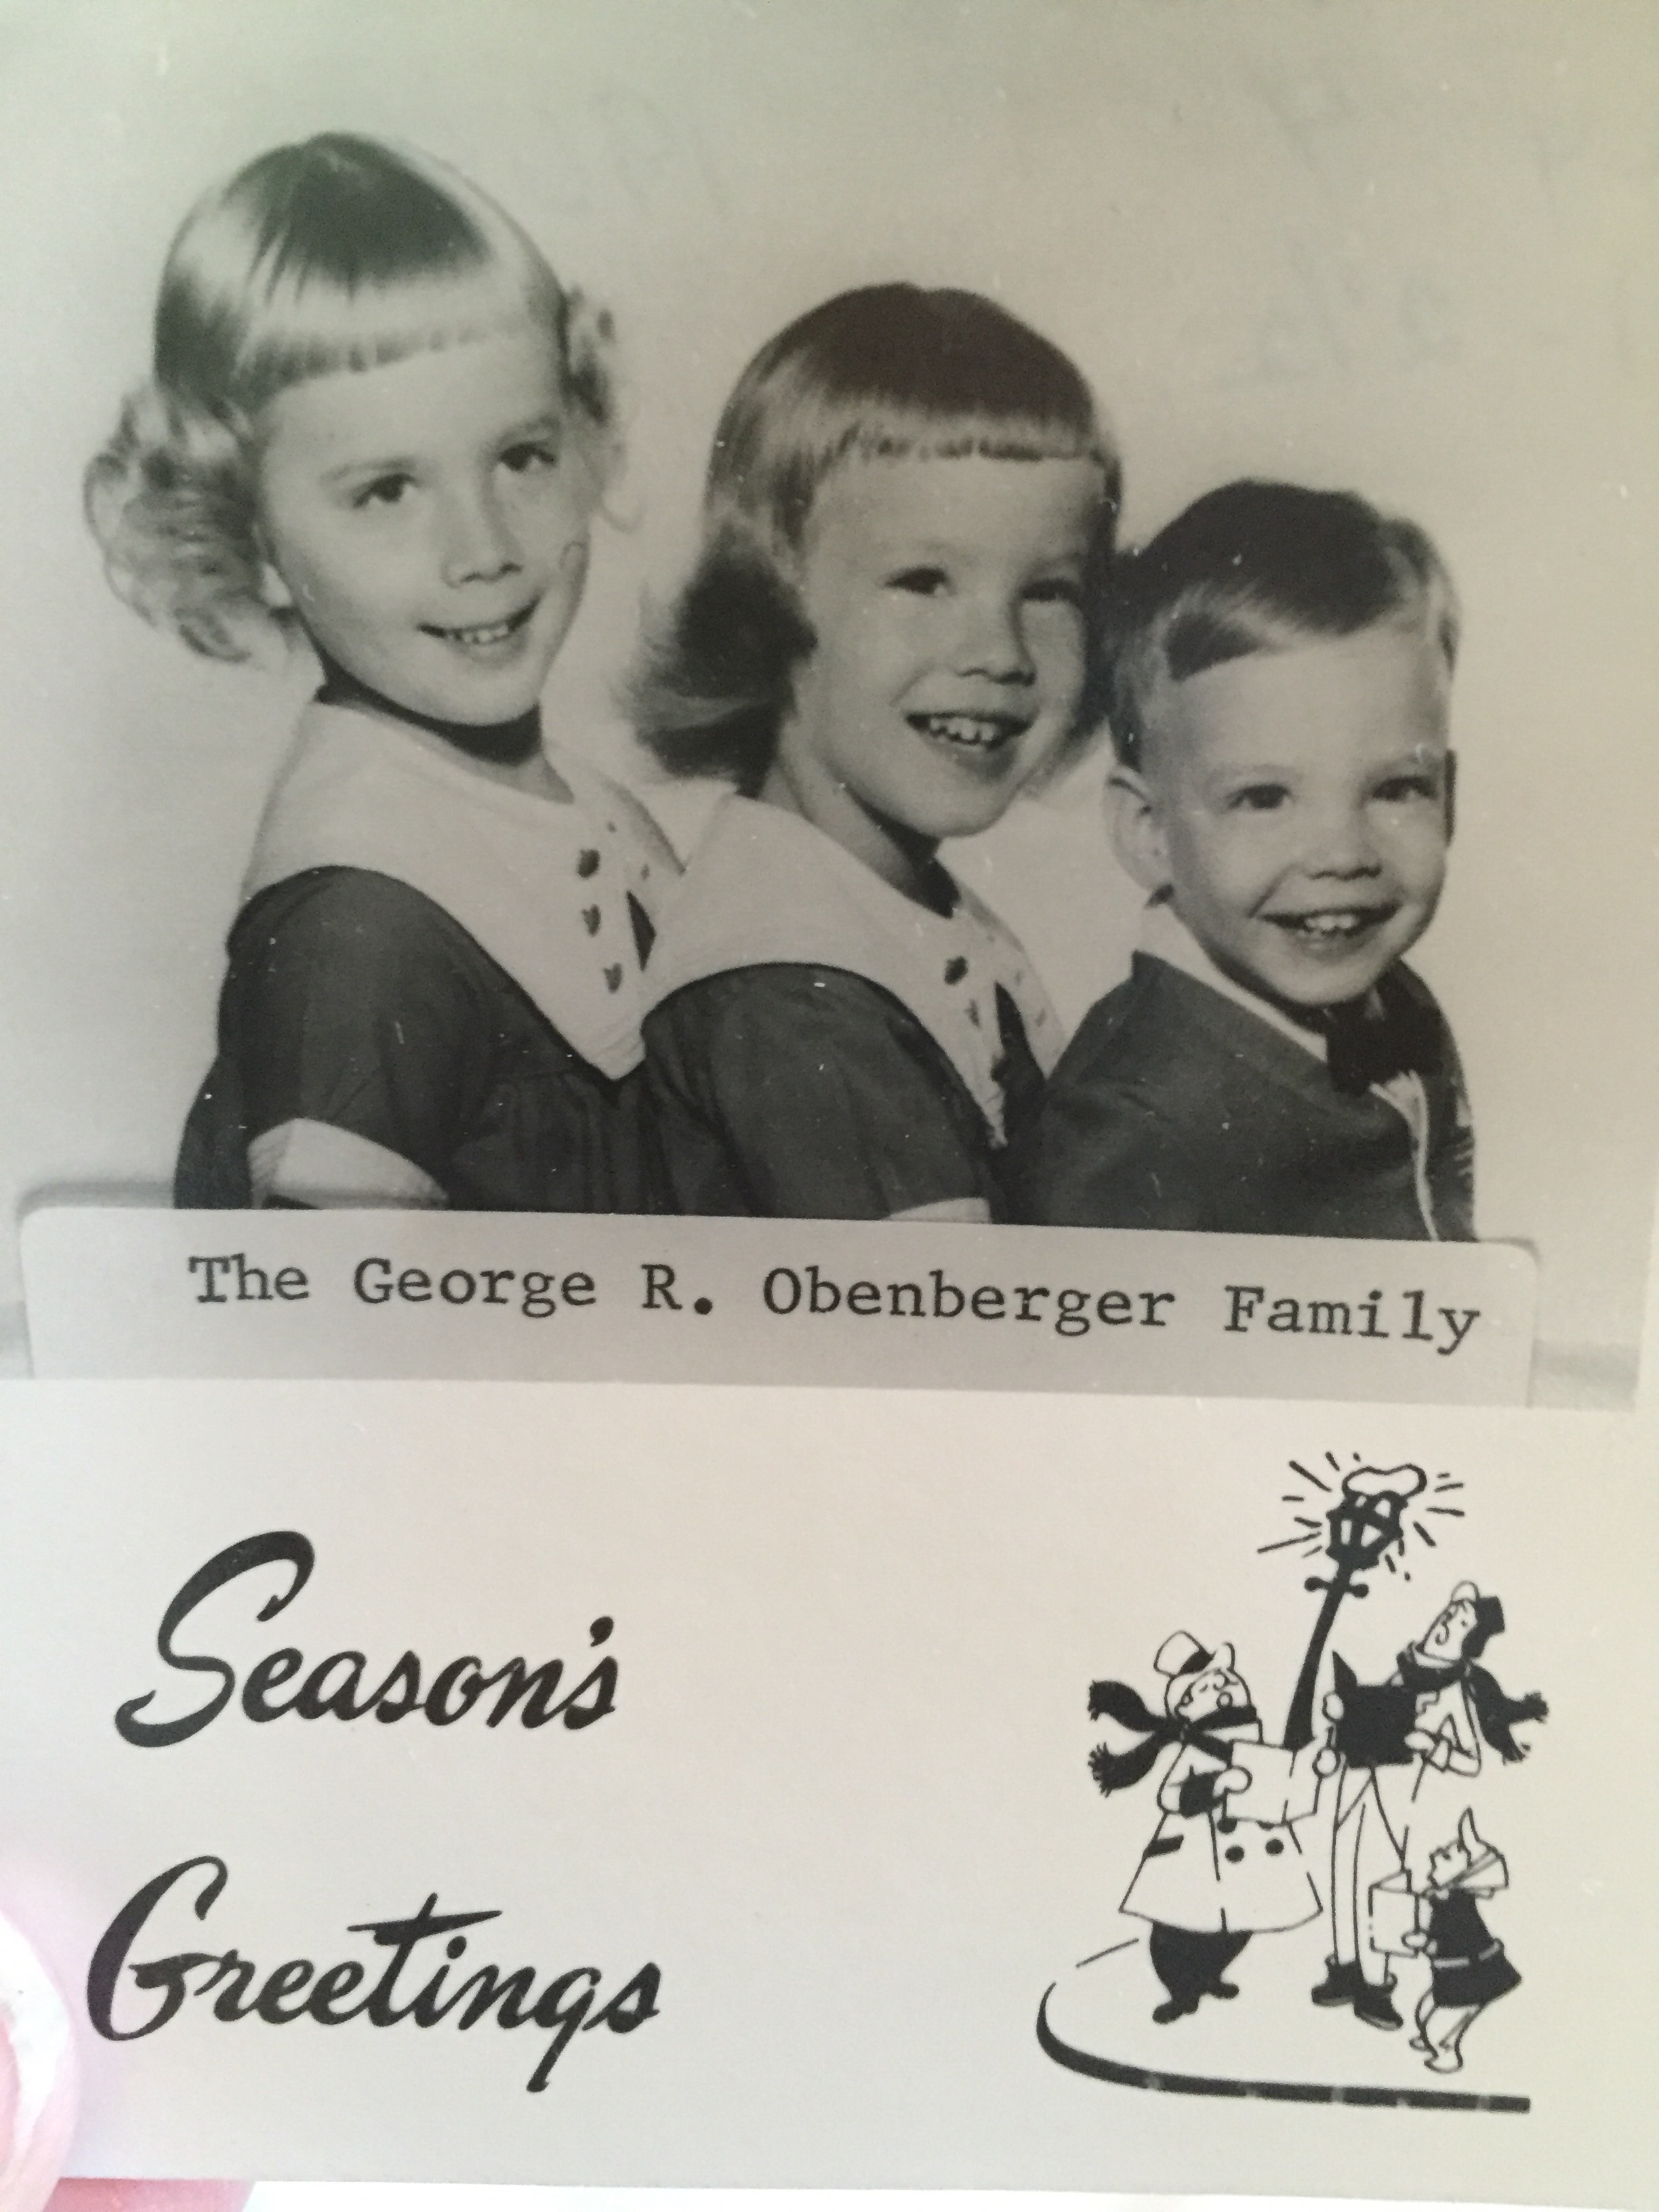 Obenberger Family, 1964